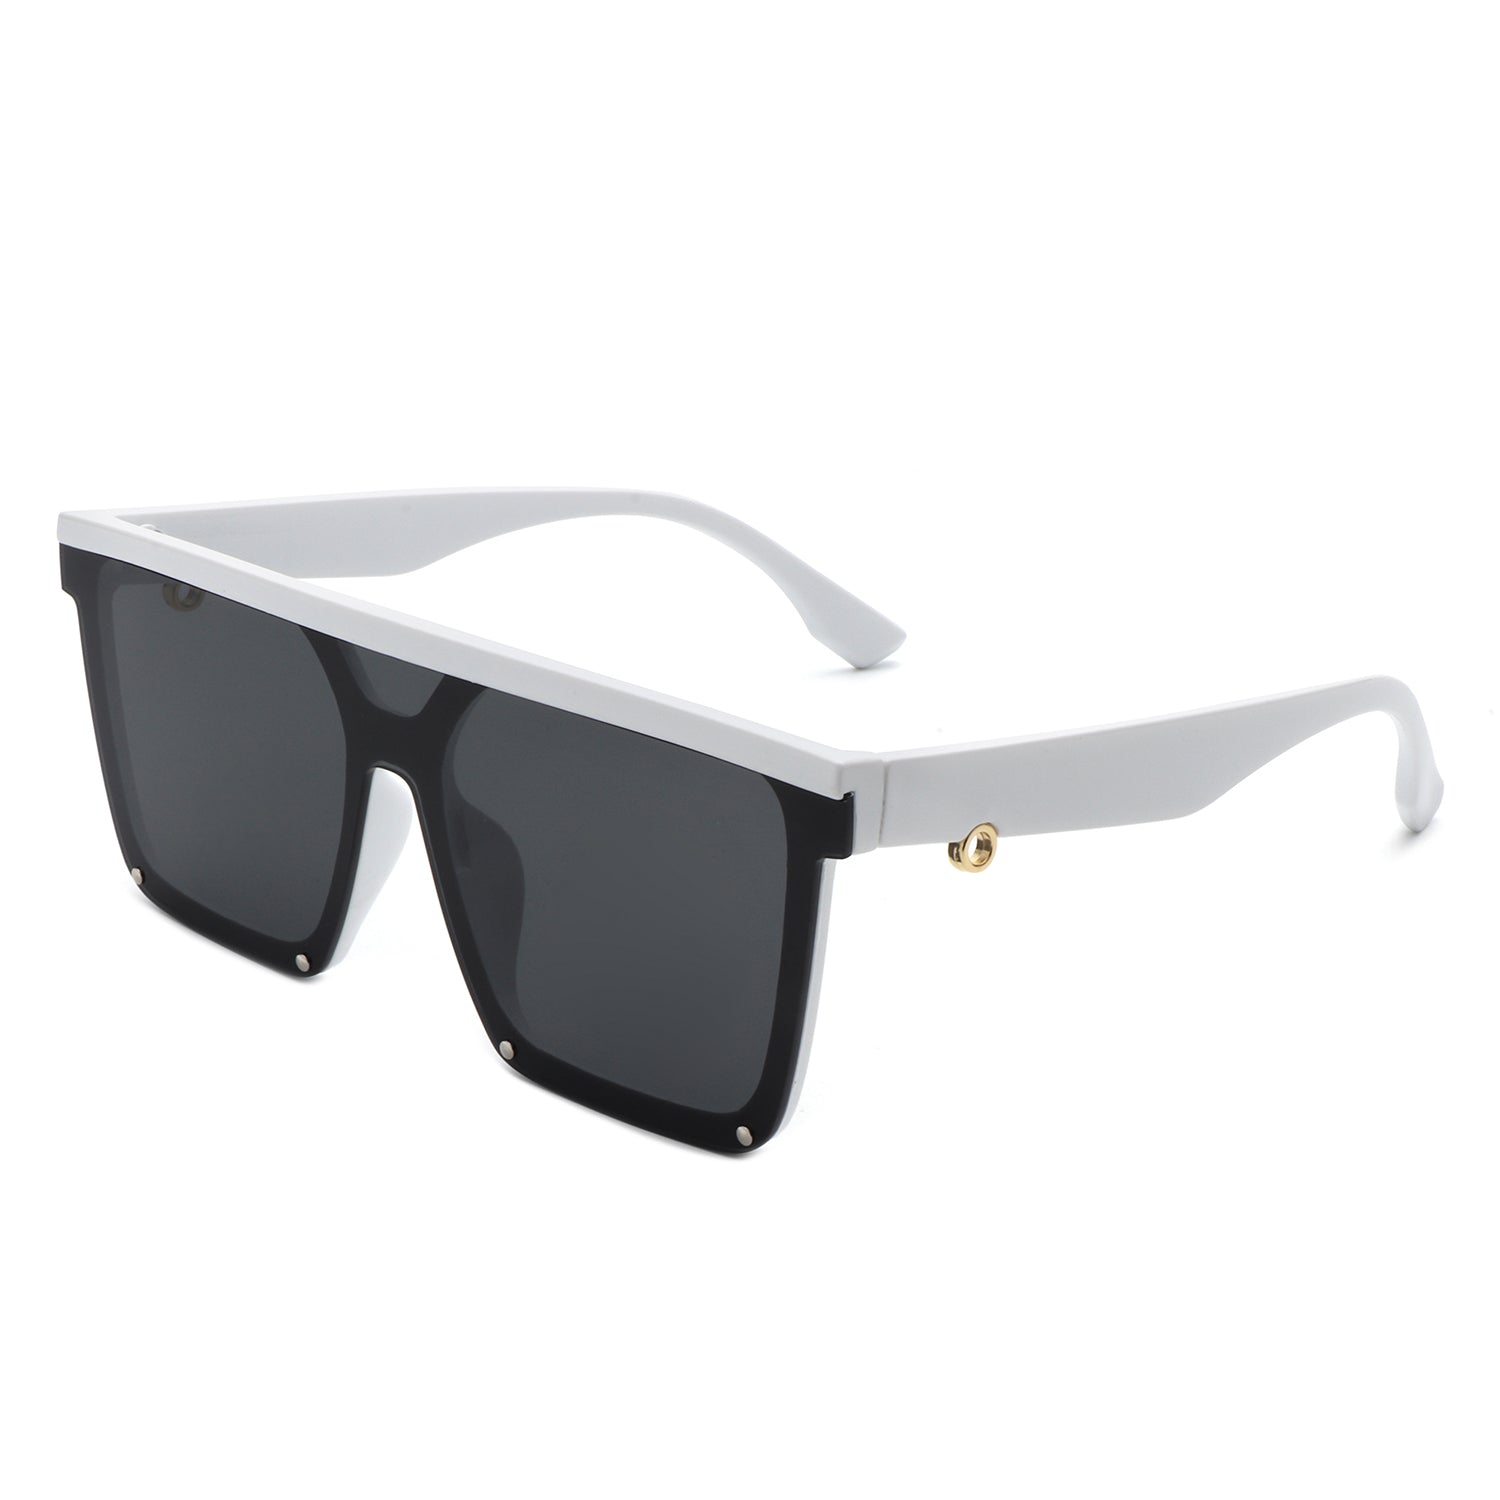 Sunquest Women's Square Flat Top Sunglasses